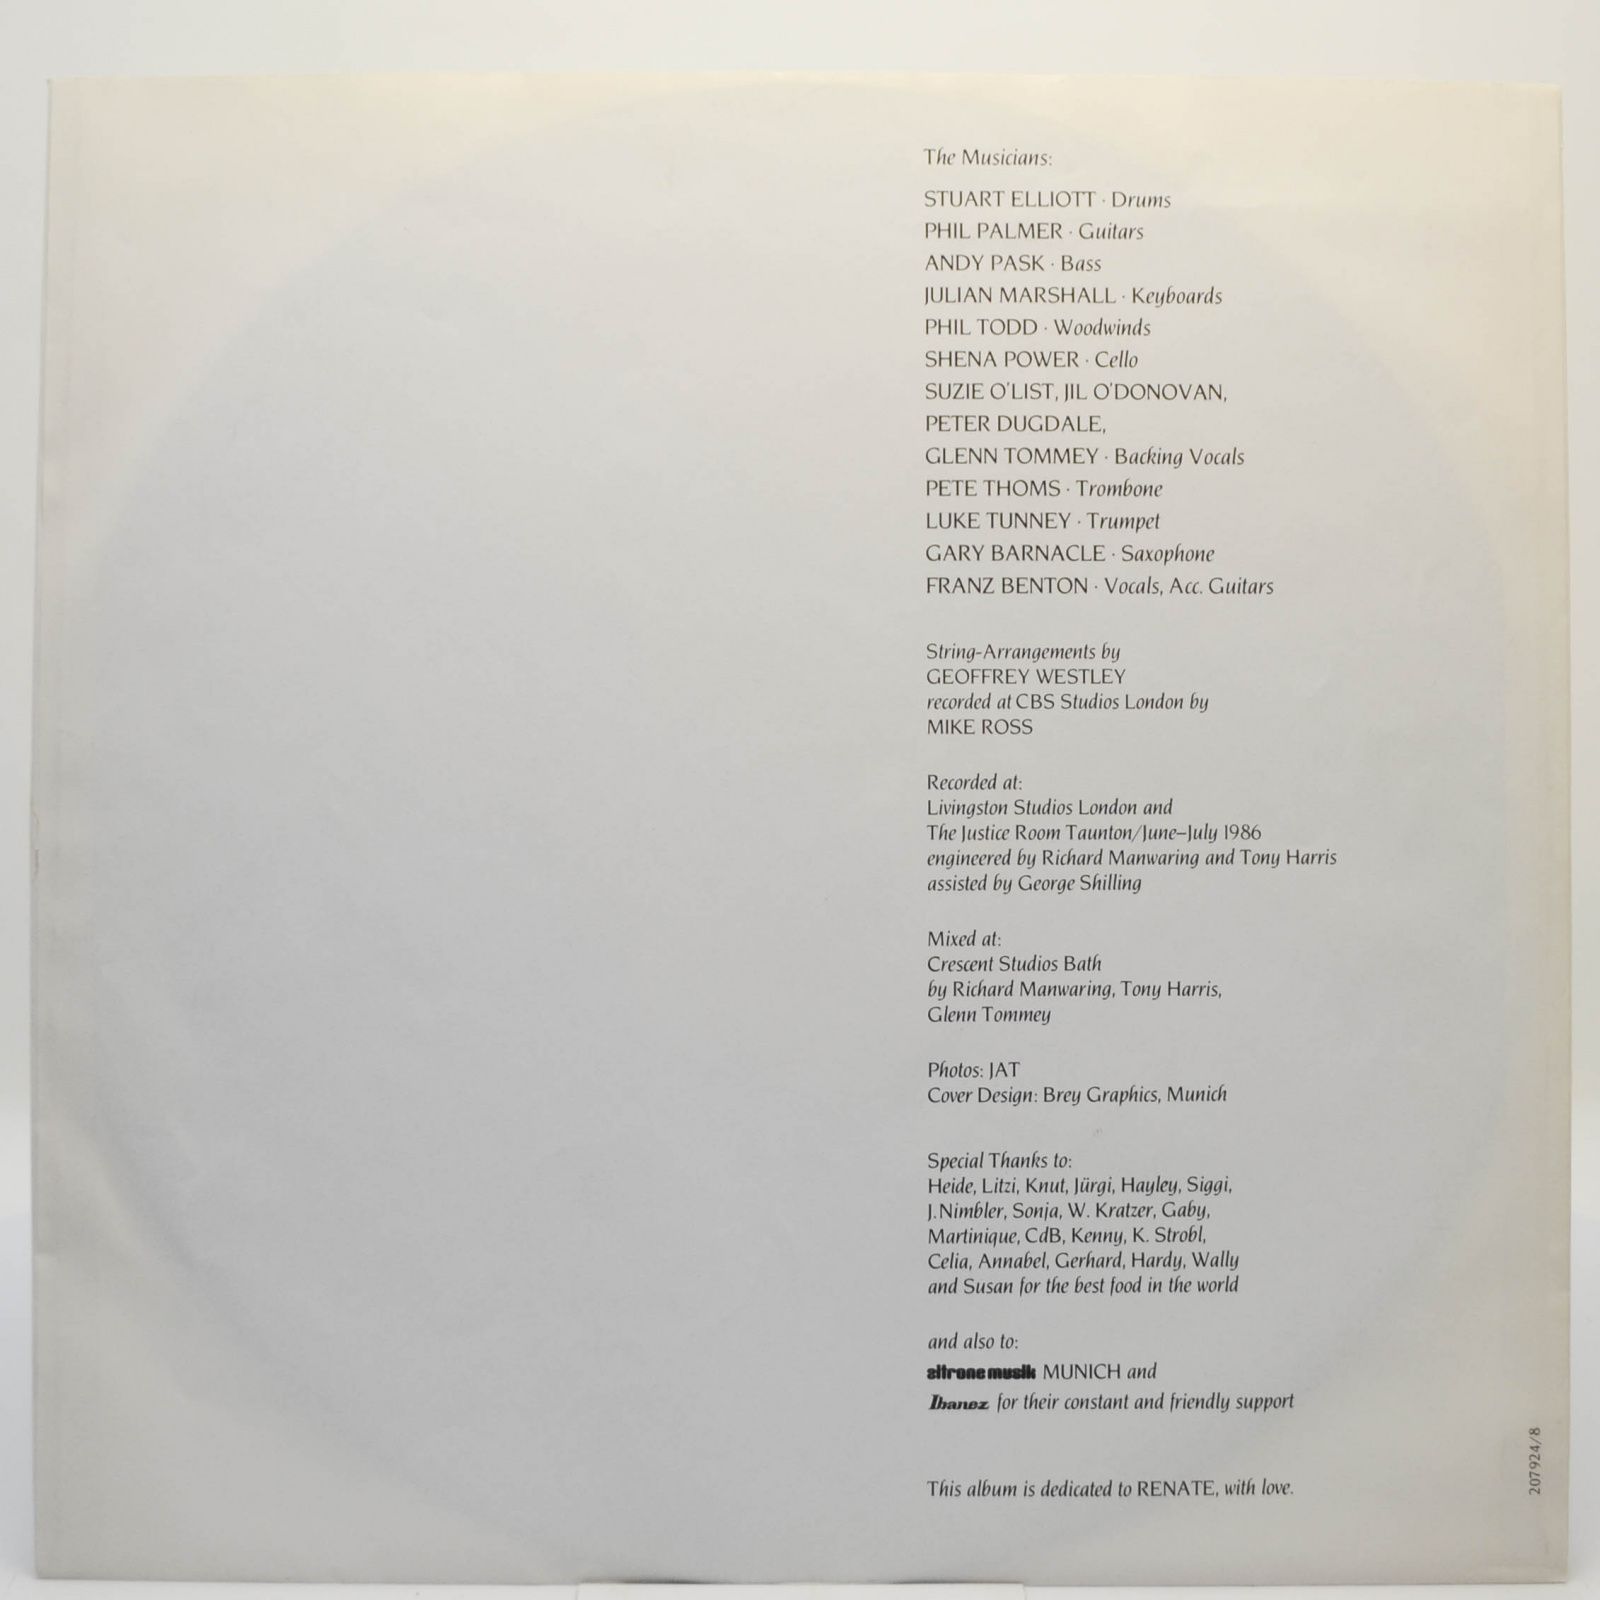 Franz Benton — Talking To A Wall, 1986